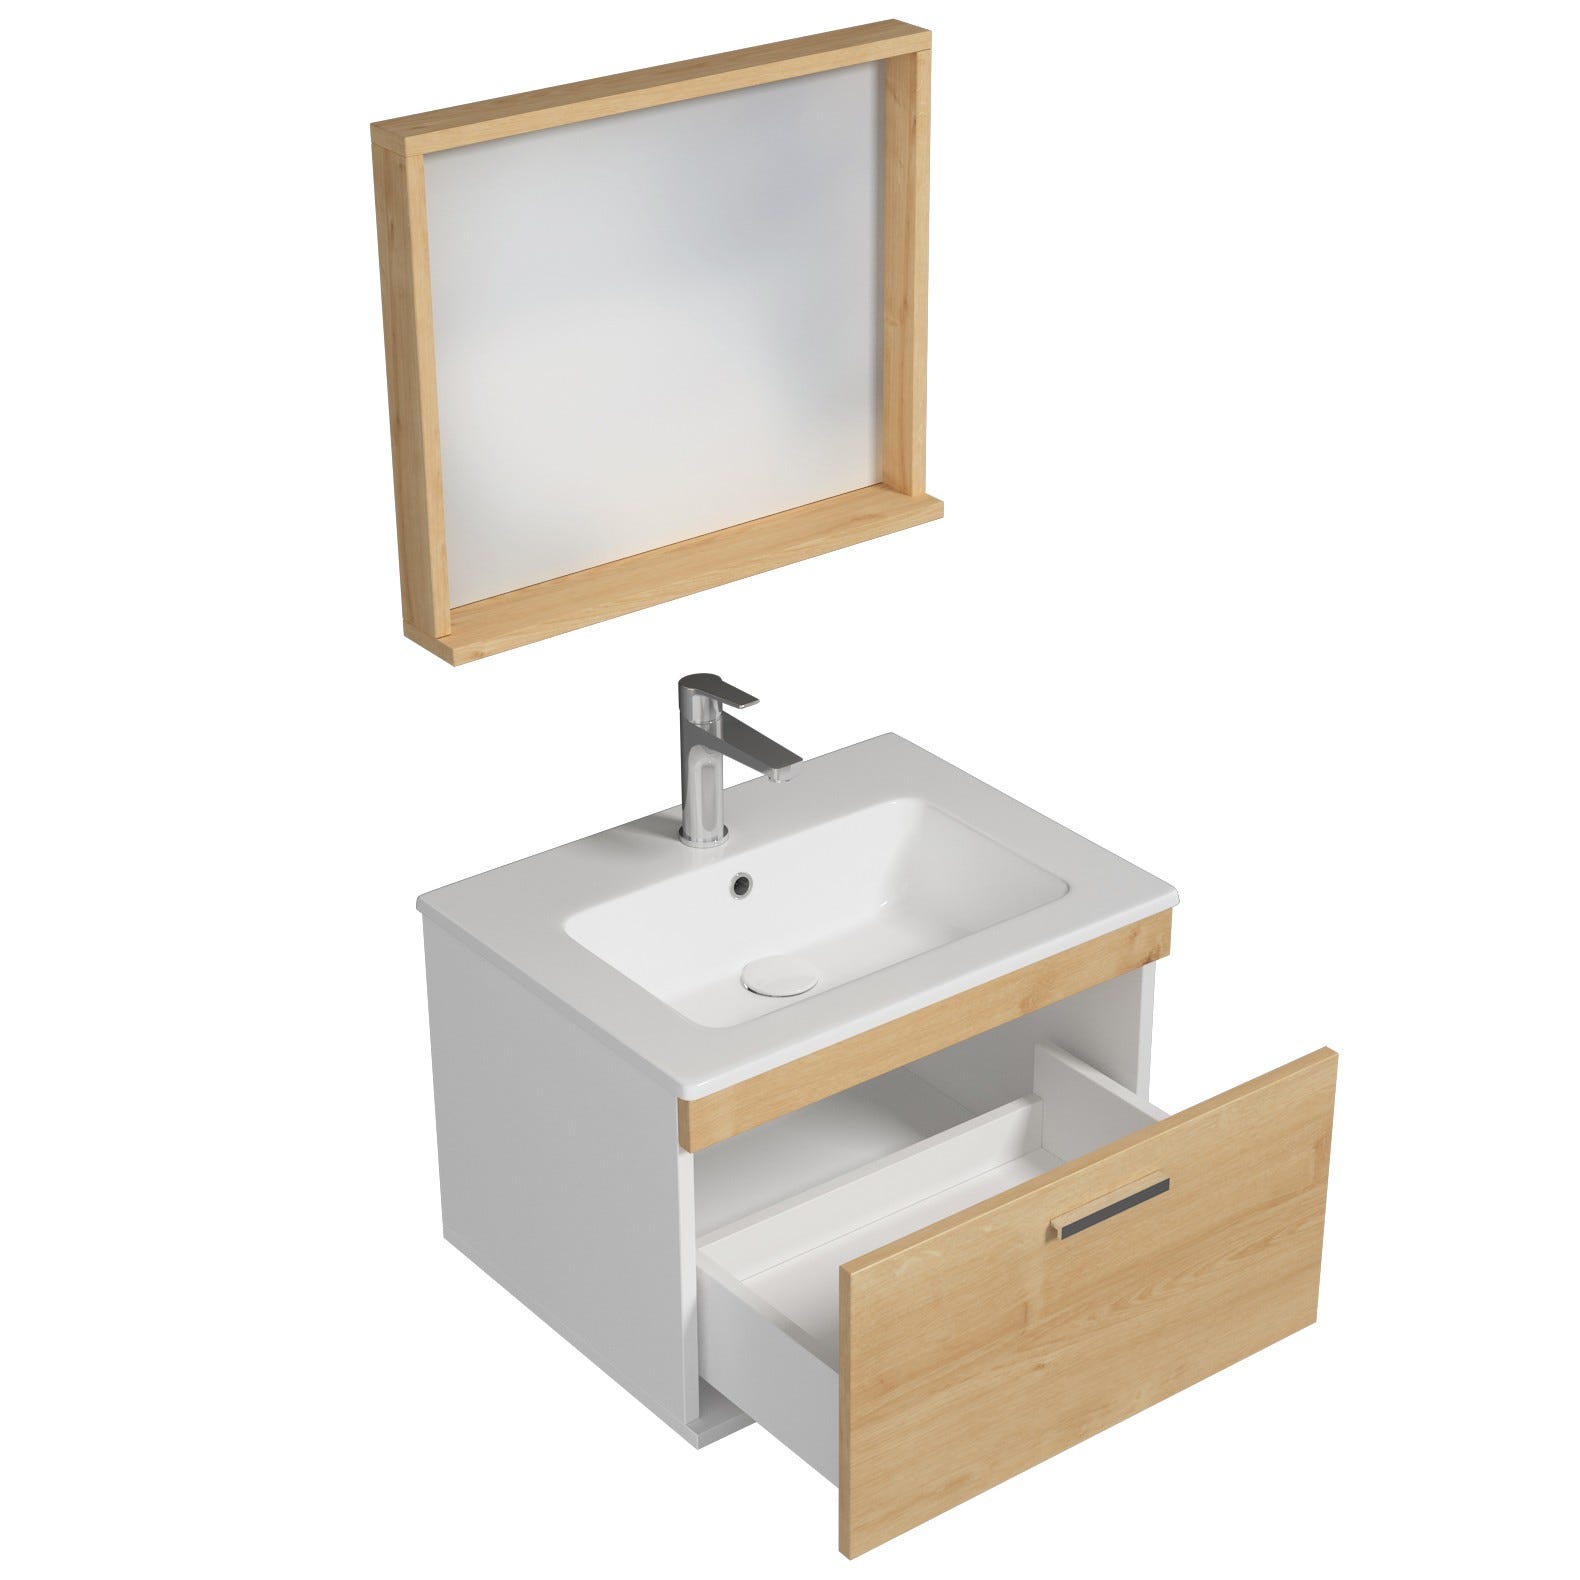 RUBITE Meuble salle de bain simple vasque 1 tiroir chêne clair largeur 60 cm + miroir cadre 2